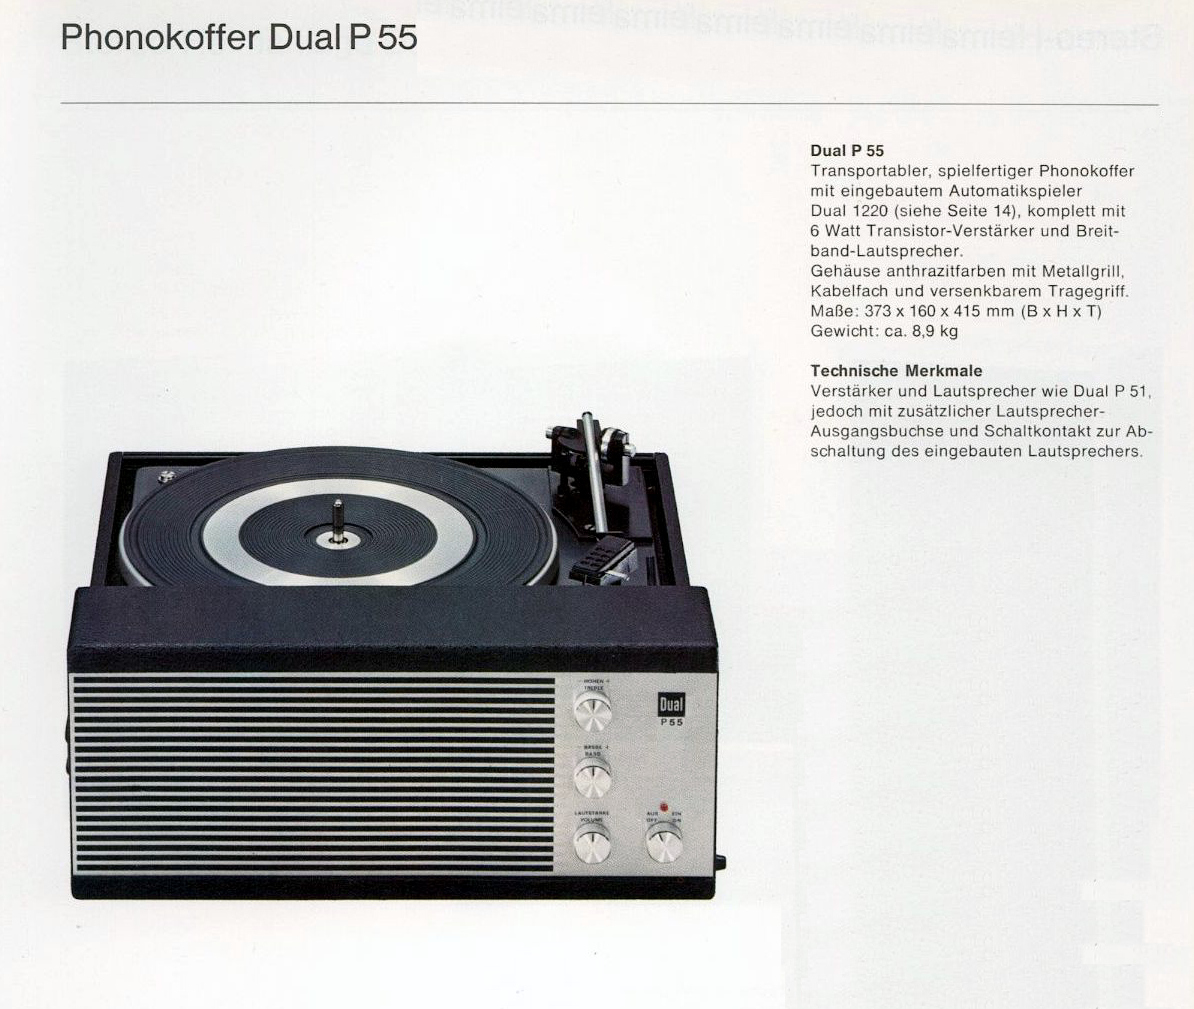 Dual Phono P-55-Prospekt-1.jpg